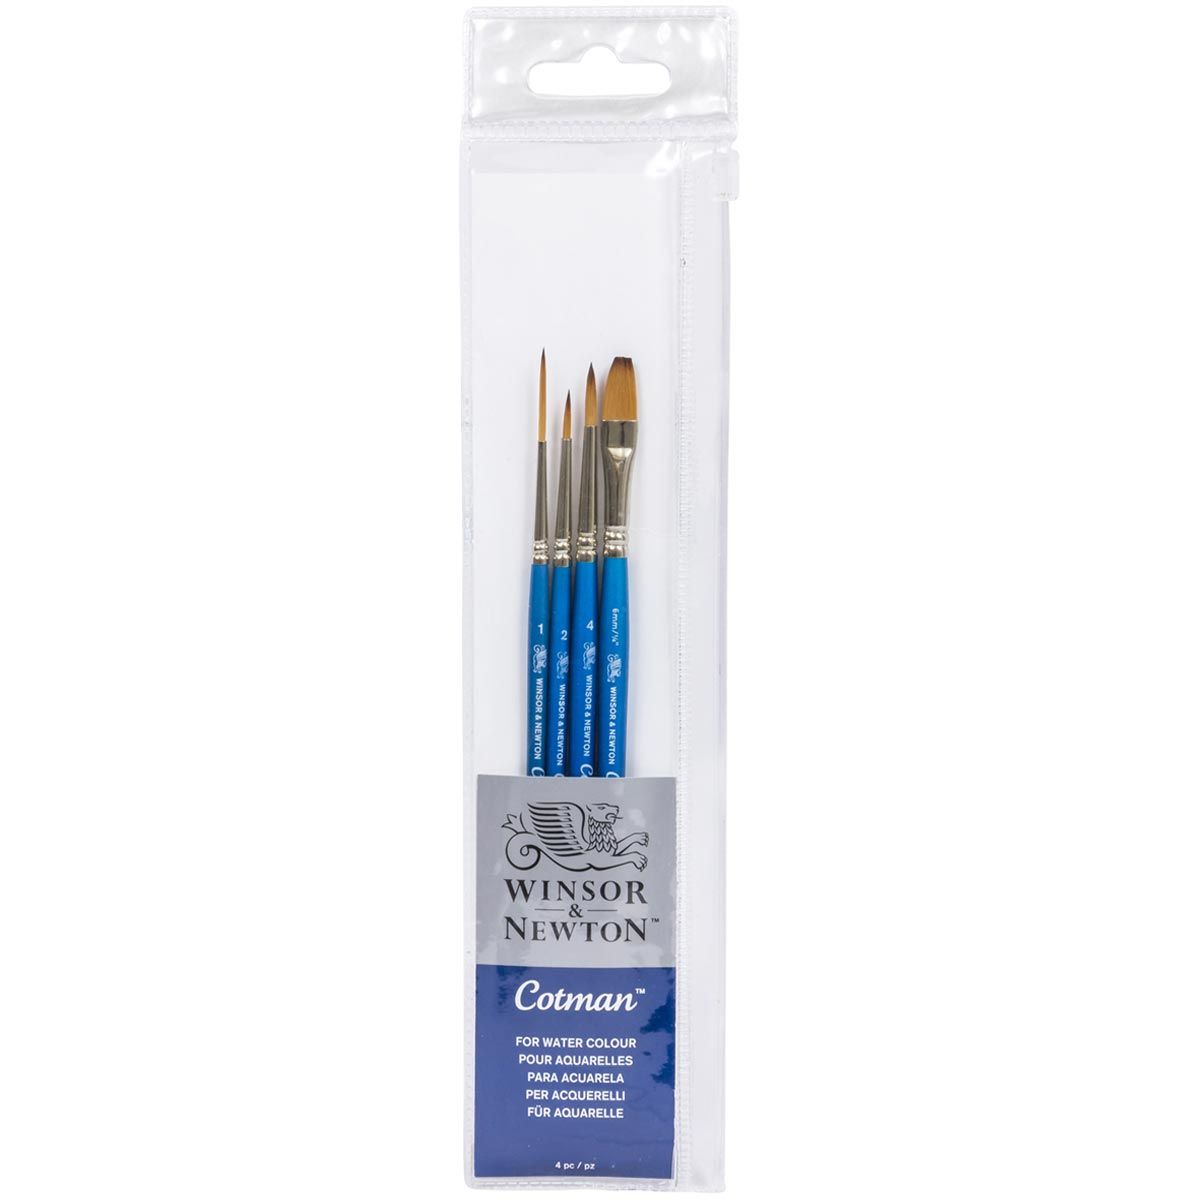 Winsor & Newton Cotman Watercolour Brush - 4pc Set